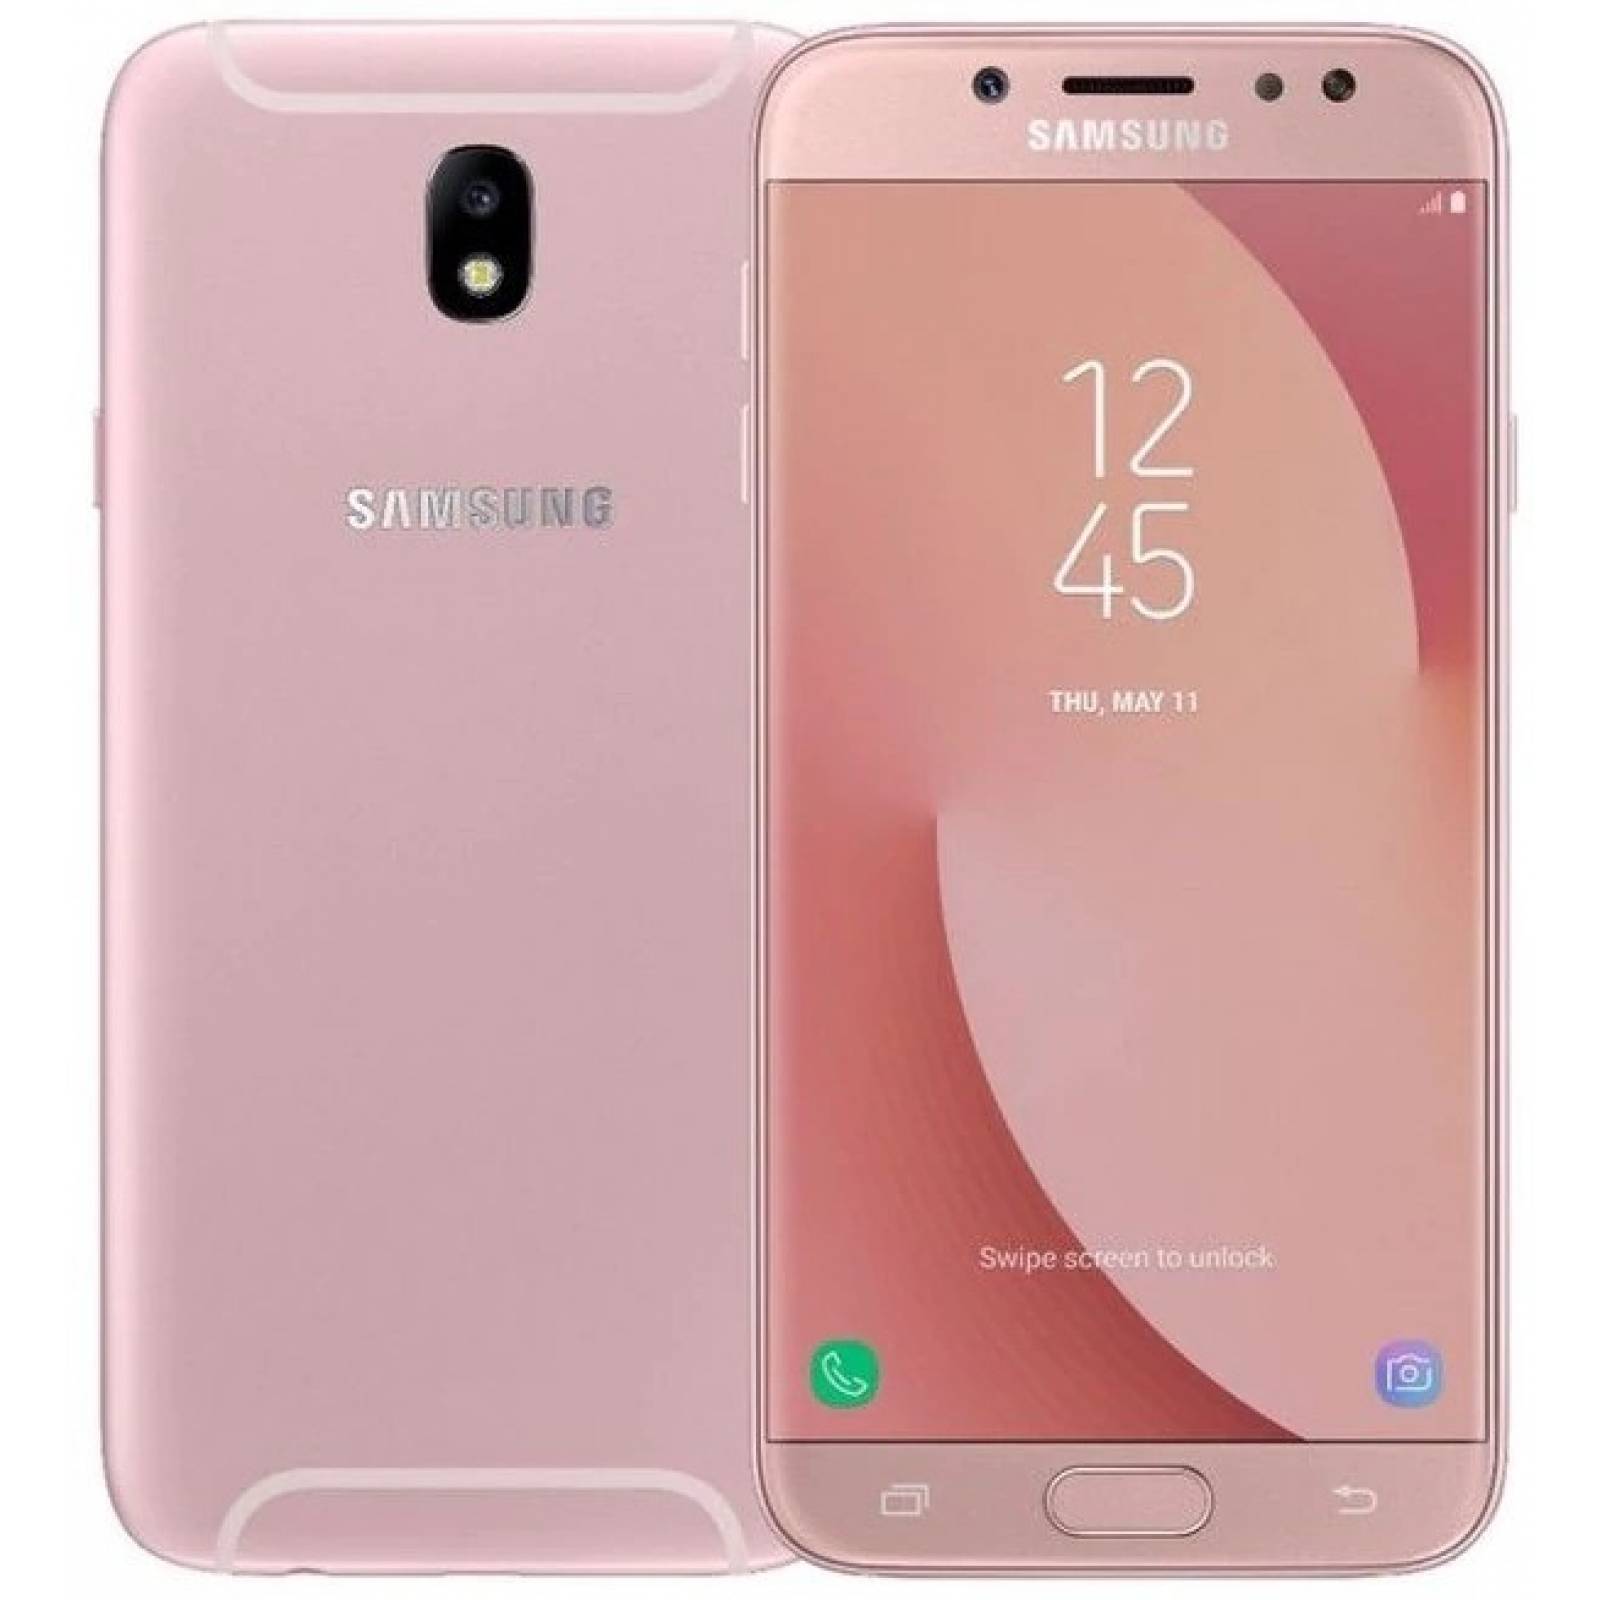 Celular Samsung Galaxy J7 Pro 2017 32gb Dual Sim 4g Lte